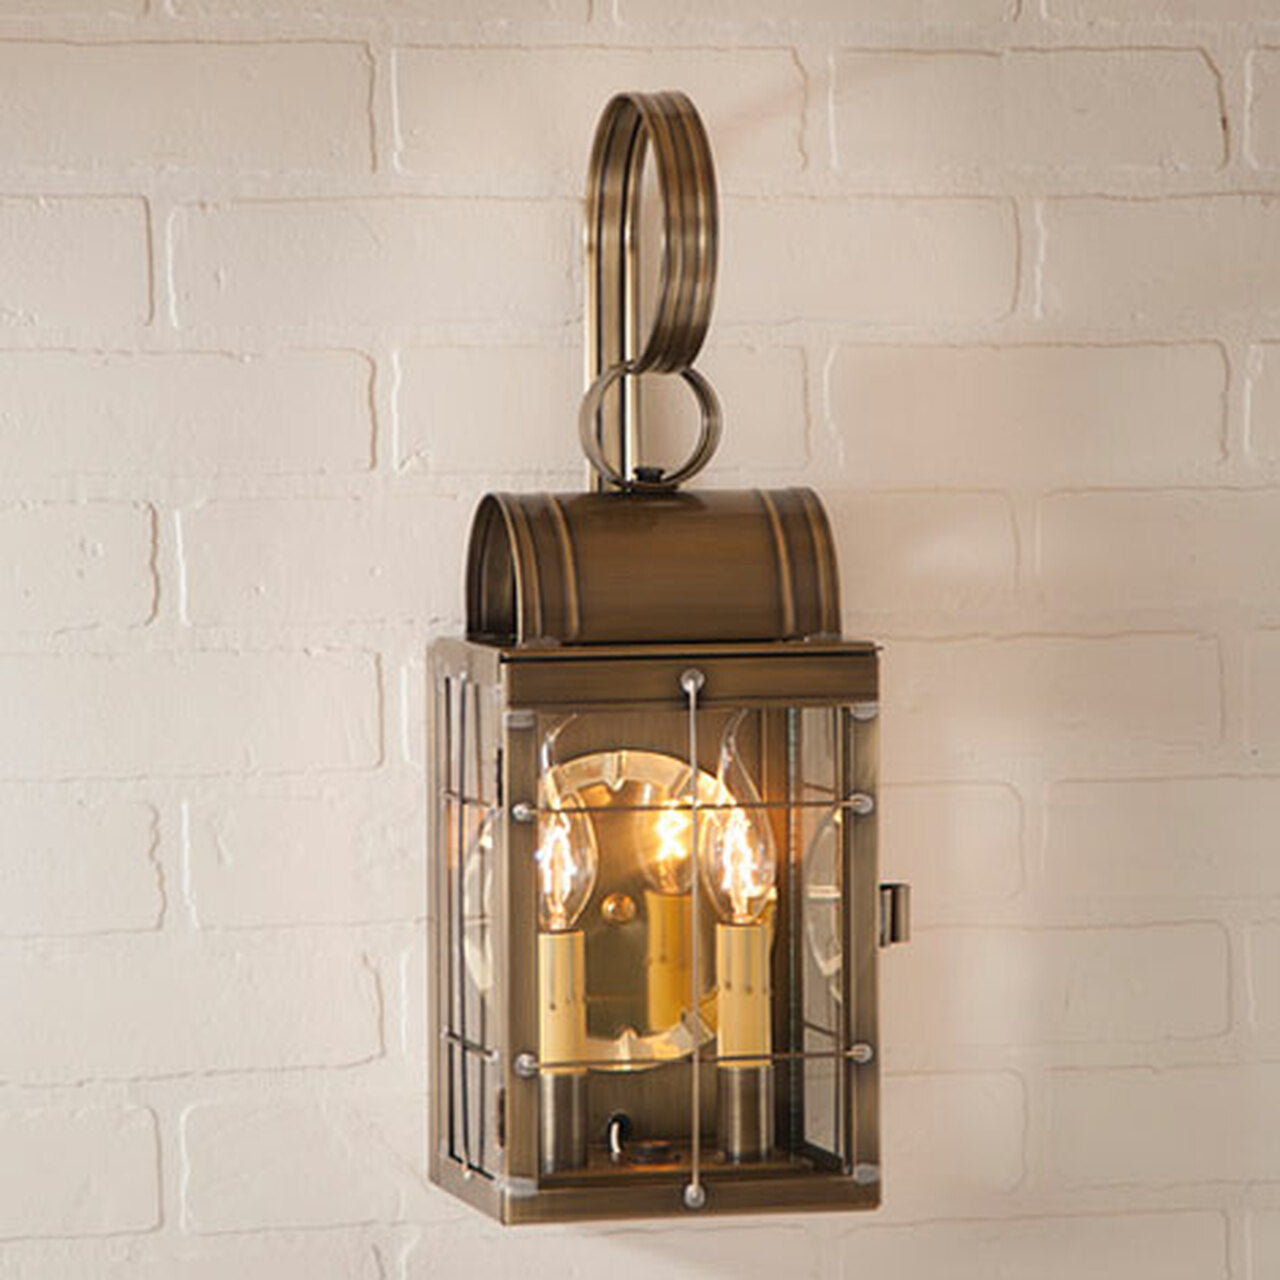 Double Wall Lantern in Antique Copper - 2-Light